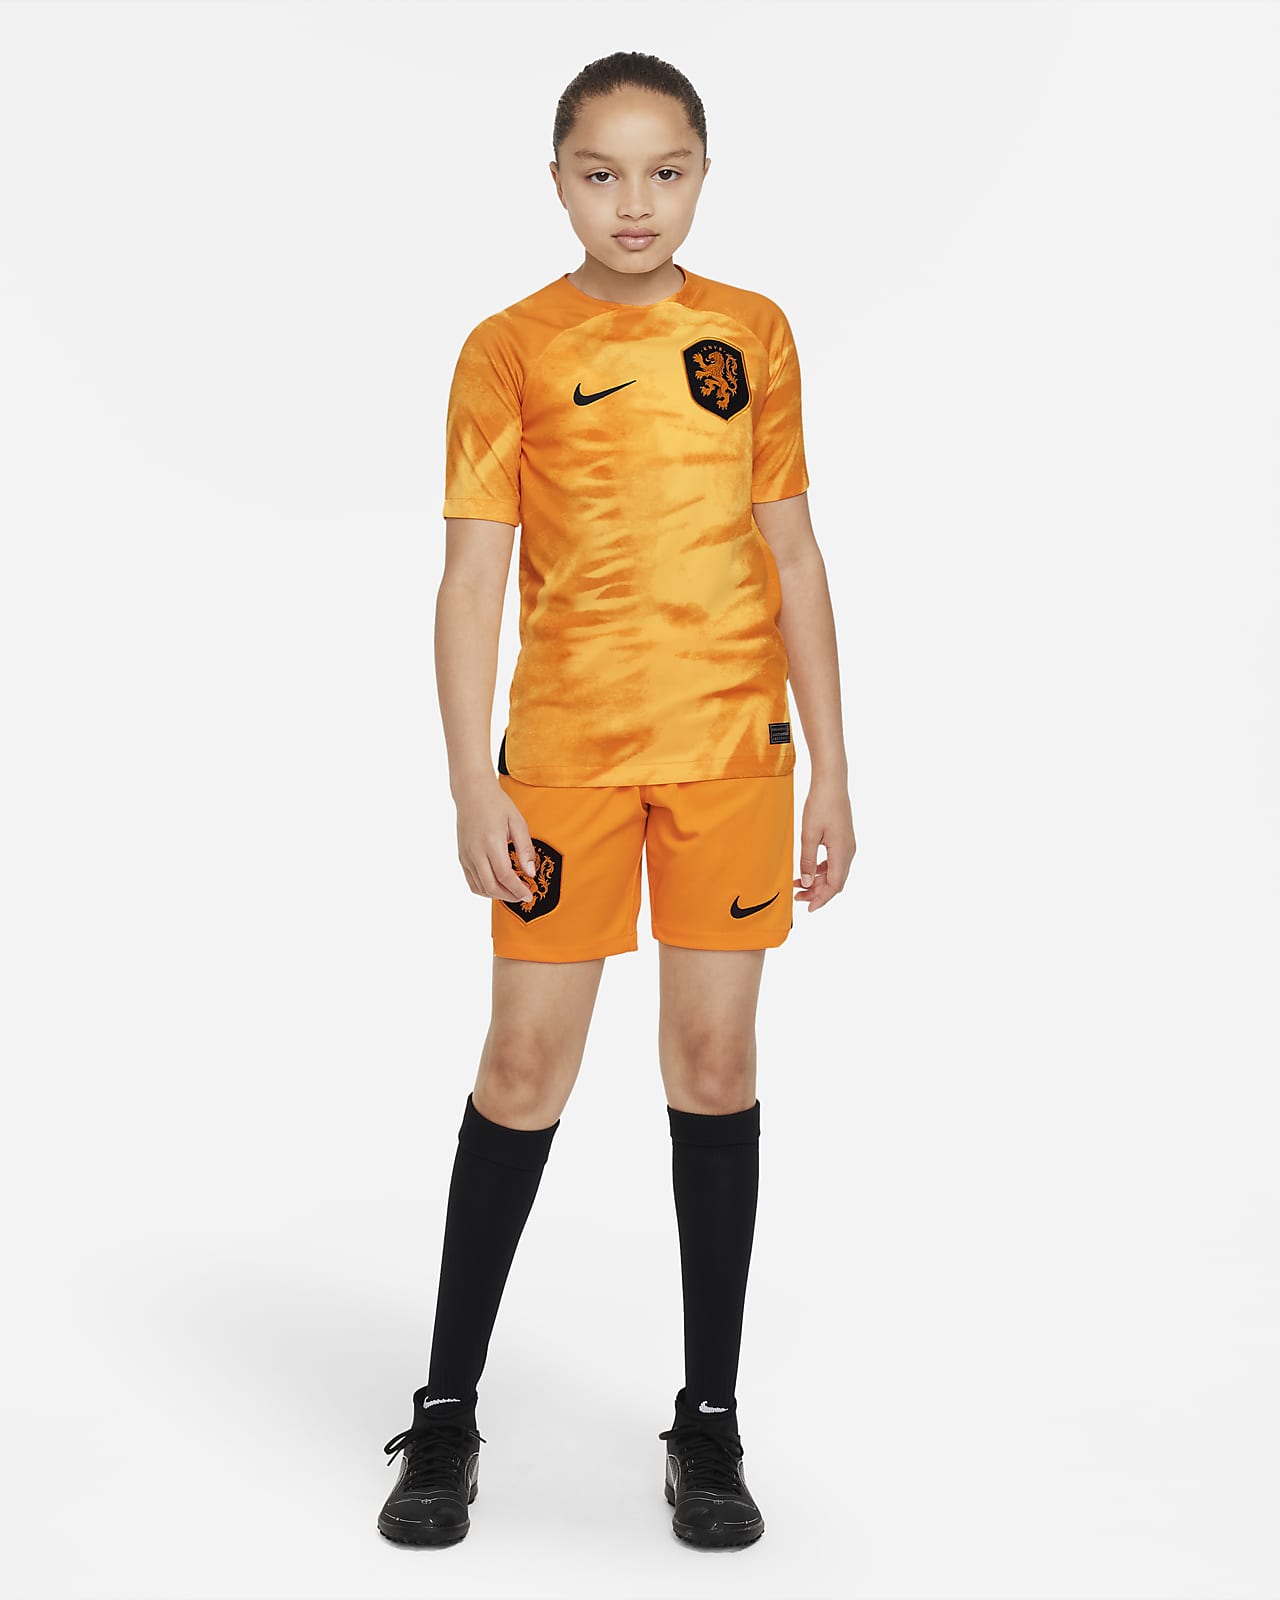 soccer jersey orange